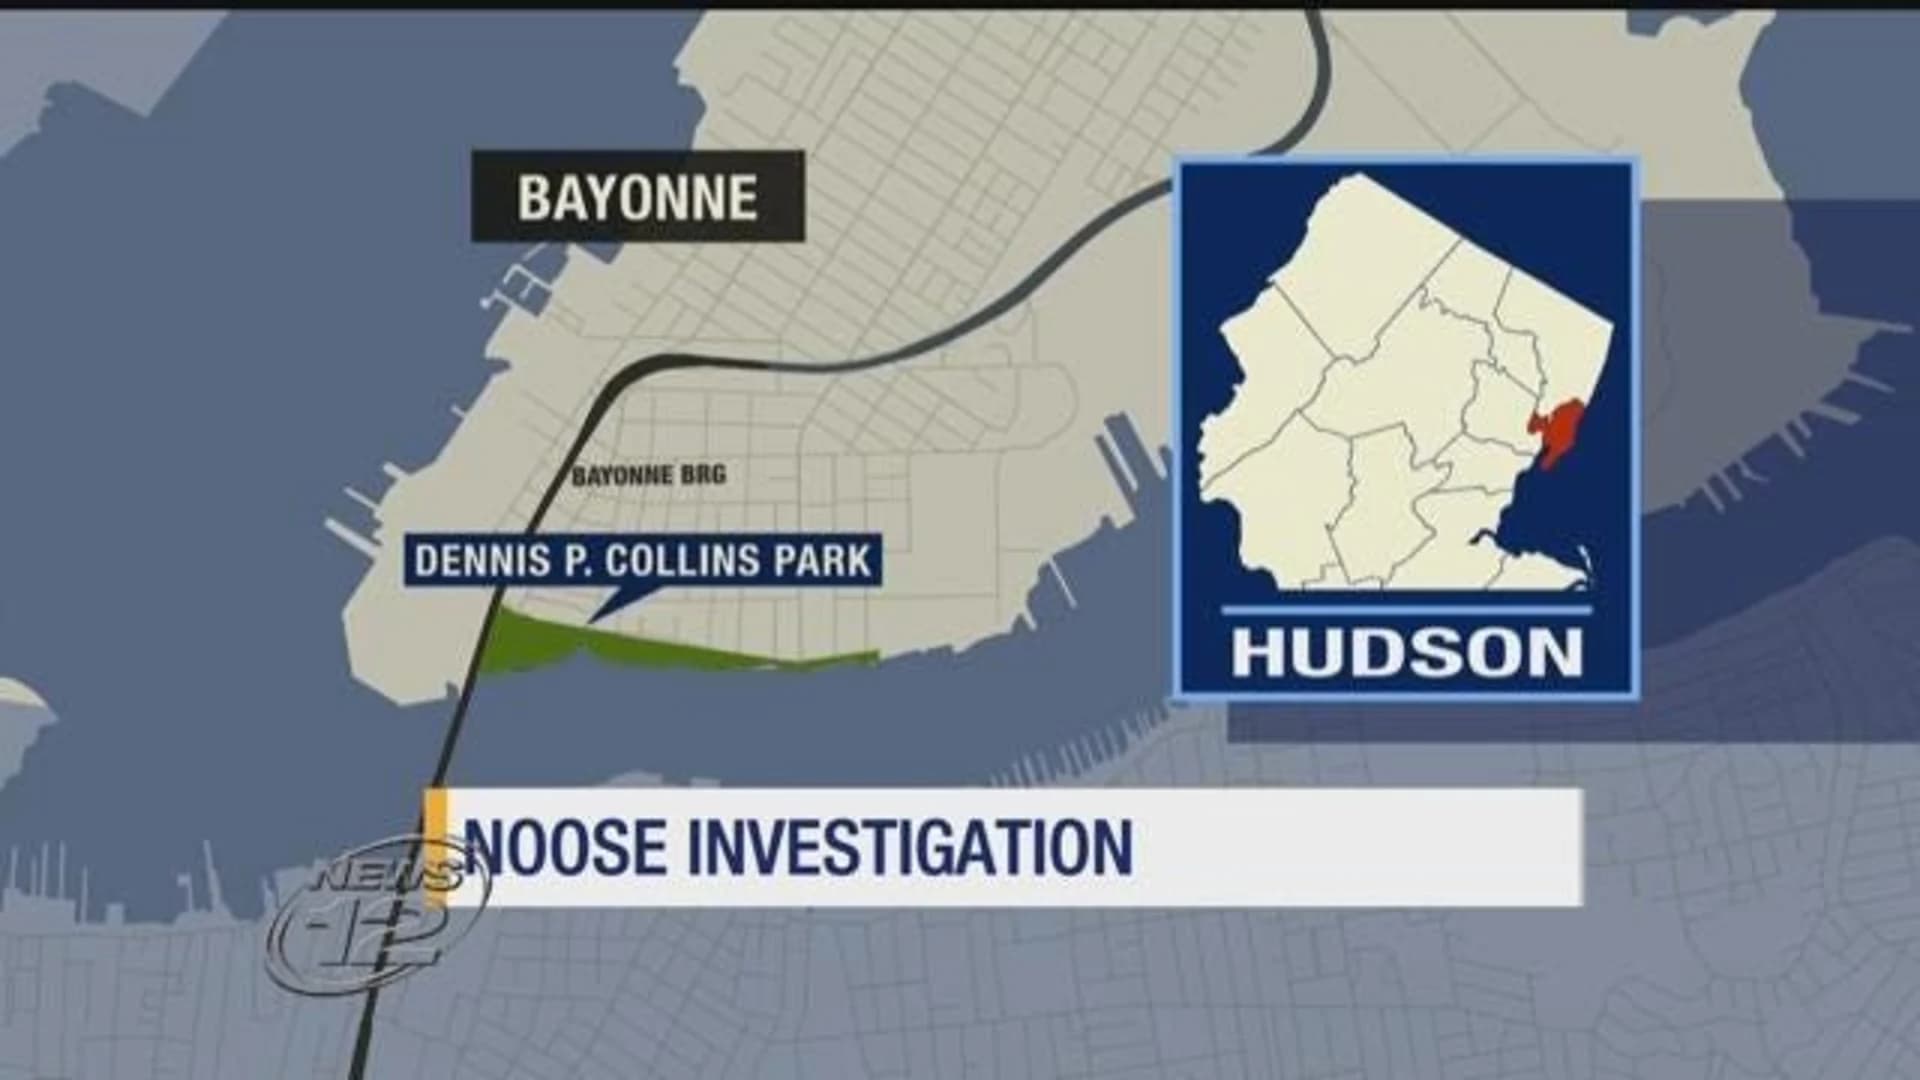 Police: Noose found in Dennis Collins Park in Bayonne